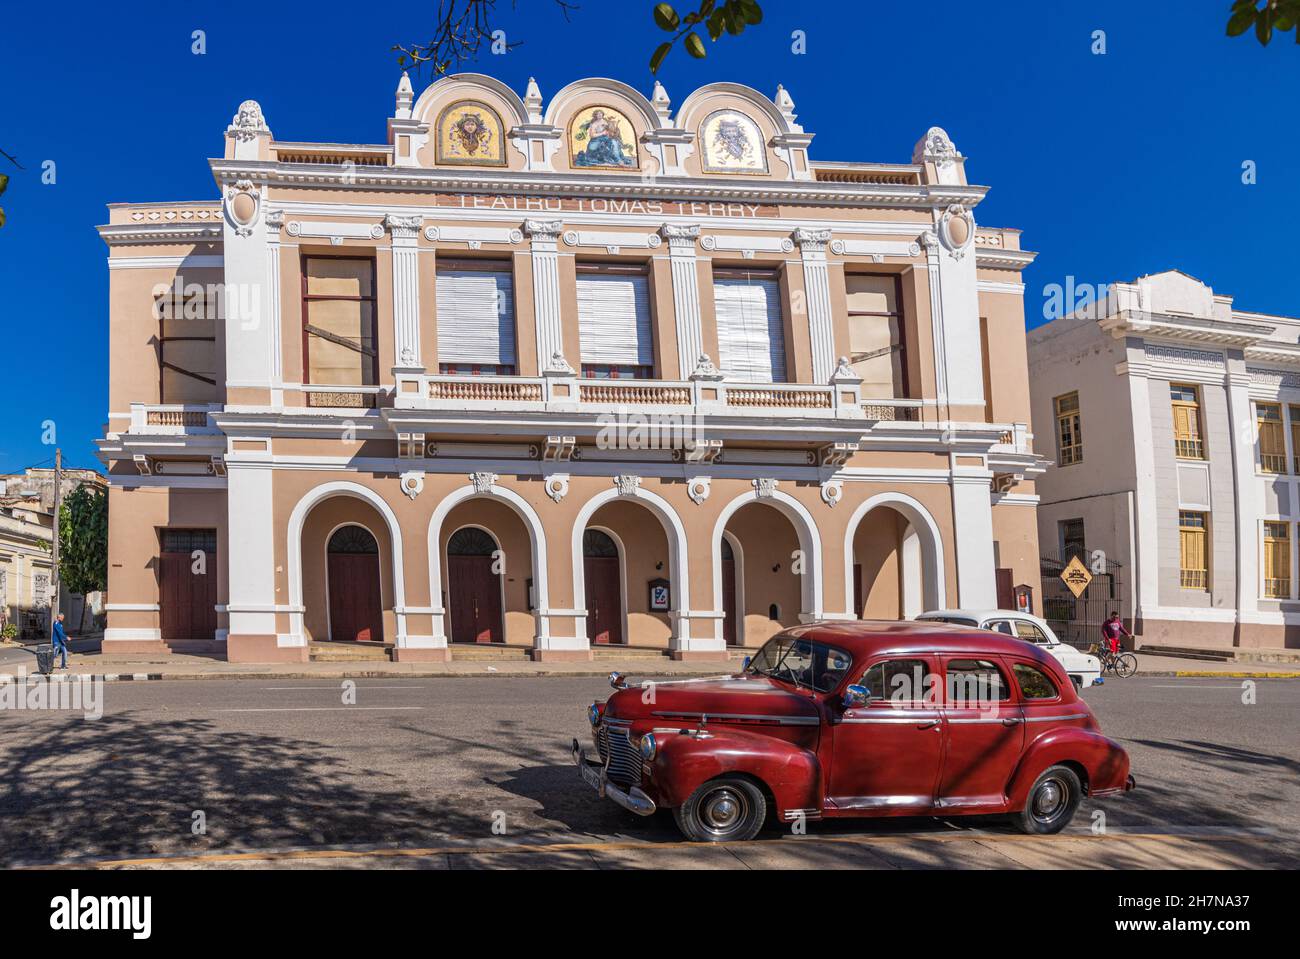 CIENFUEGOS, CUBA - JANUARY 10, 2021: Theater Tomas Terry building on January 10, 2021 in Cienfuegos, Cuba. The old town is a UNESCO World Heritage Stock Photo